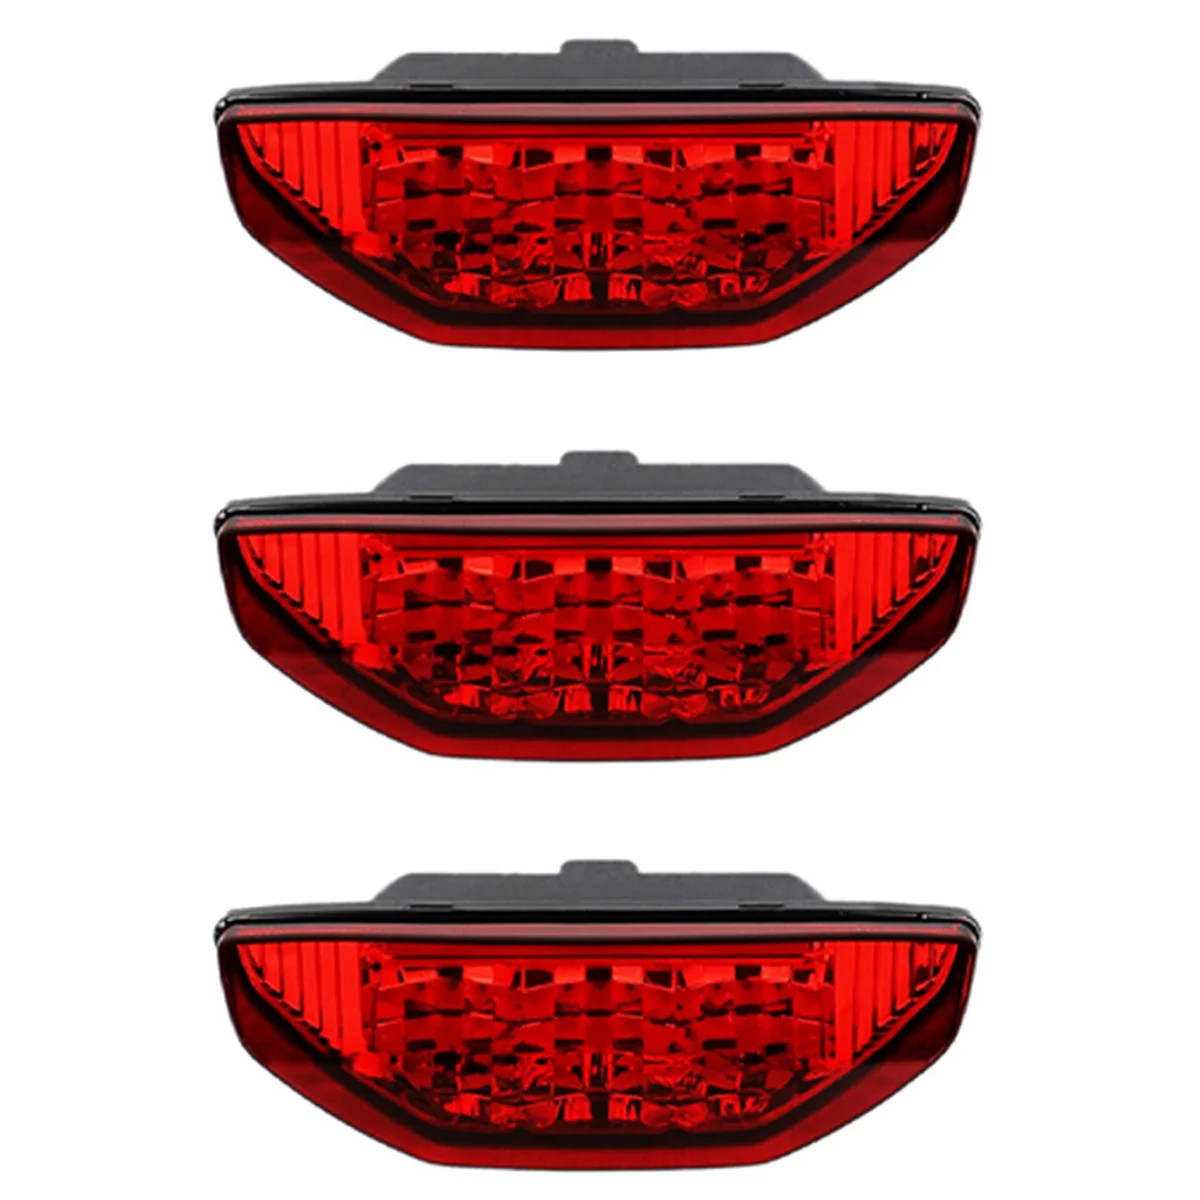 

3X Red ATV Tail Light Taillight for Honda TRX420 TRX500 Rancher Foreman TRX 400EX RUBICON TRX250 2006-2015